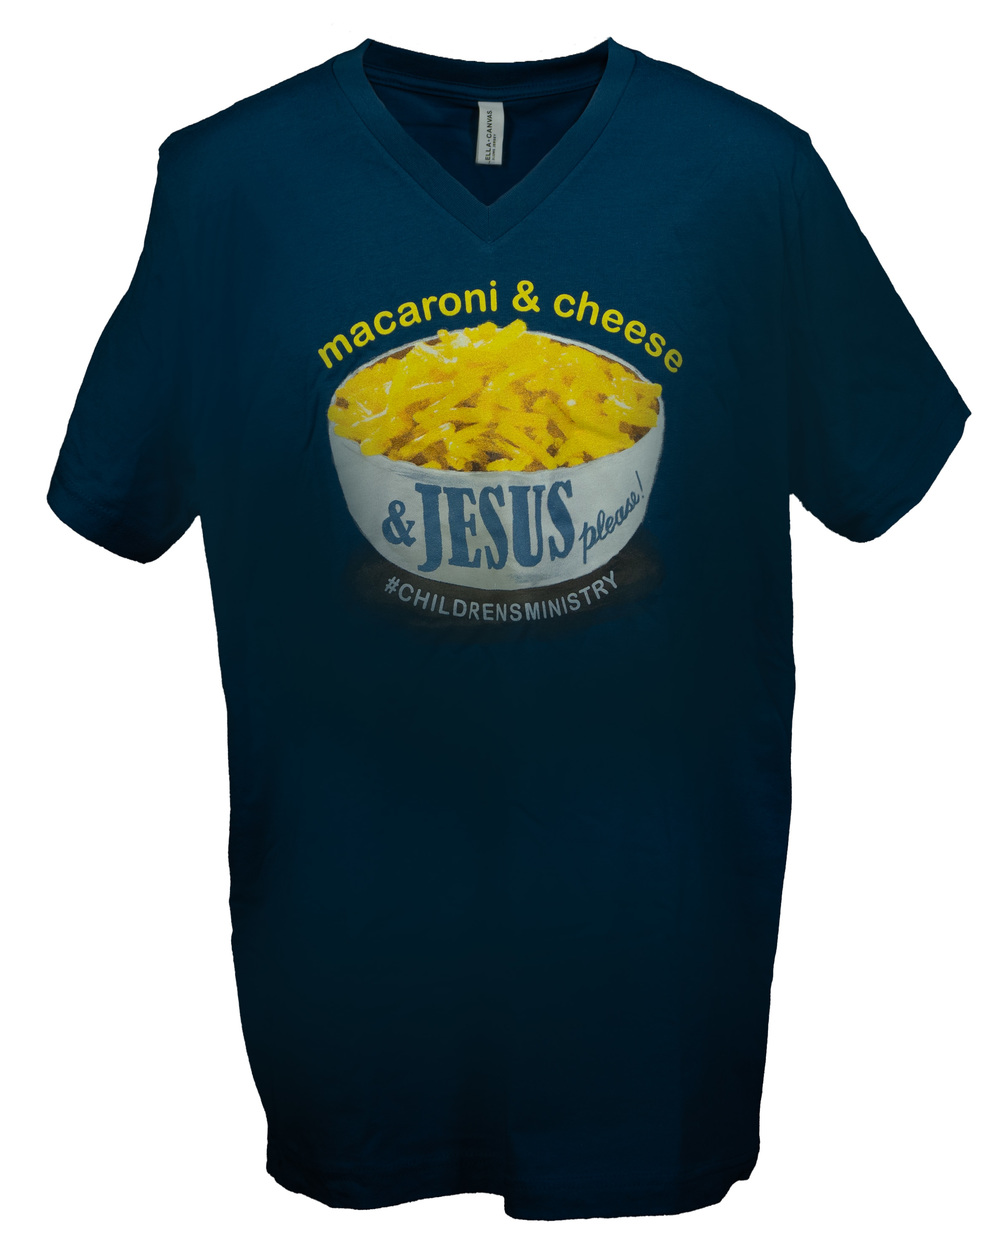 Jesus & Macaroni T-shirt Small